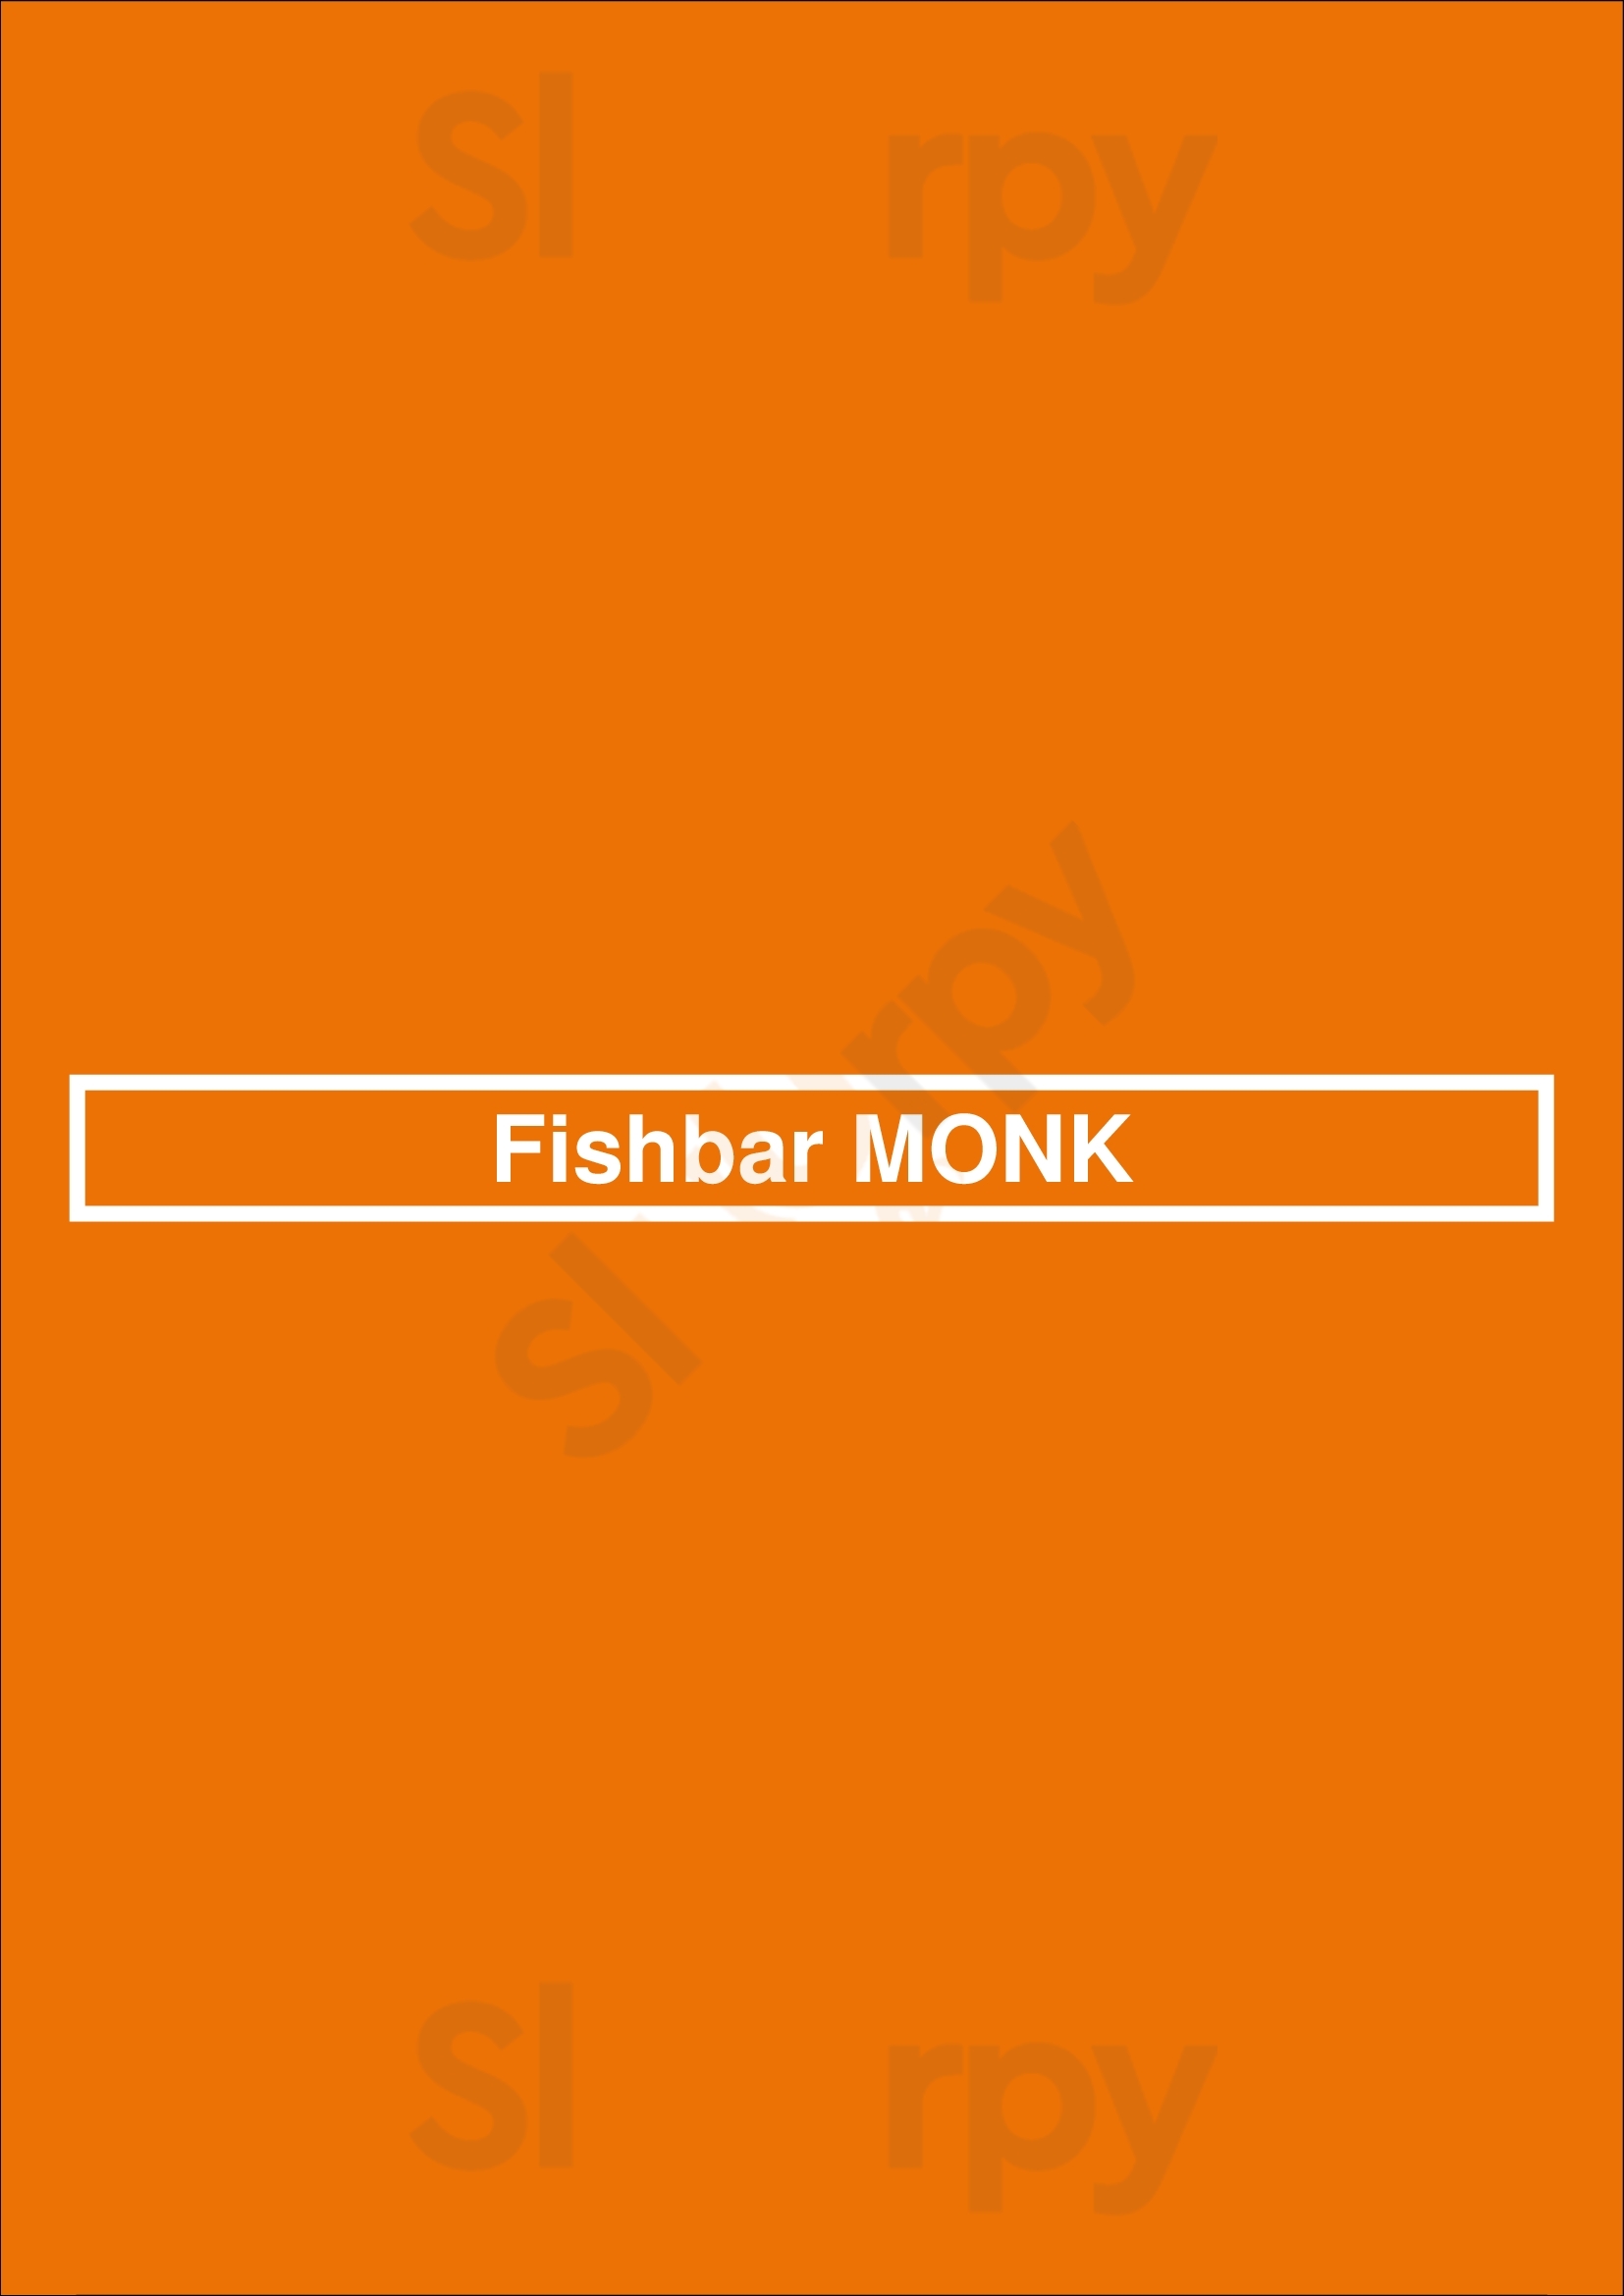 Fishbar Monk Haarlem Menu - 1